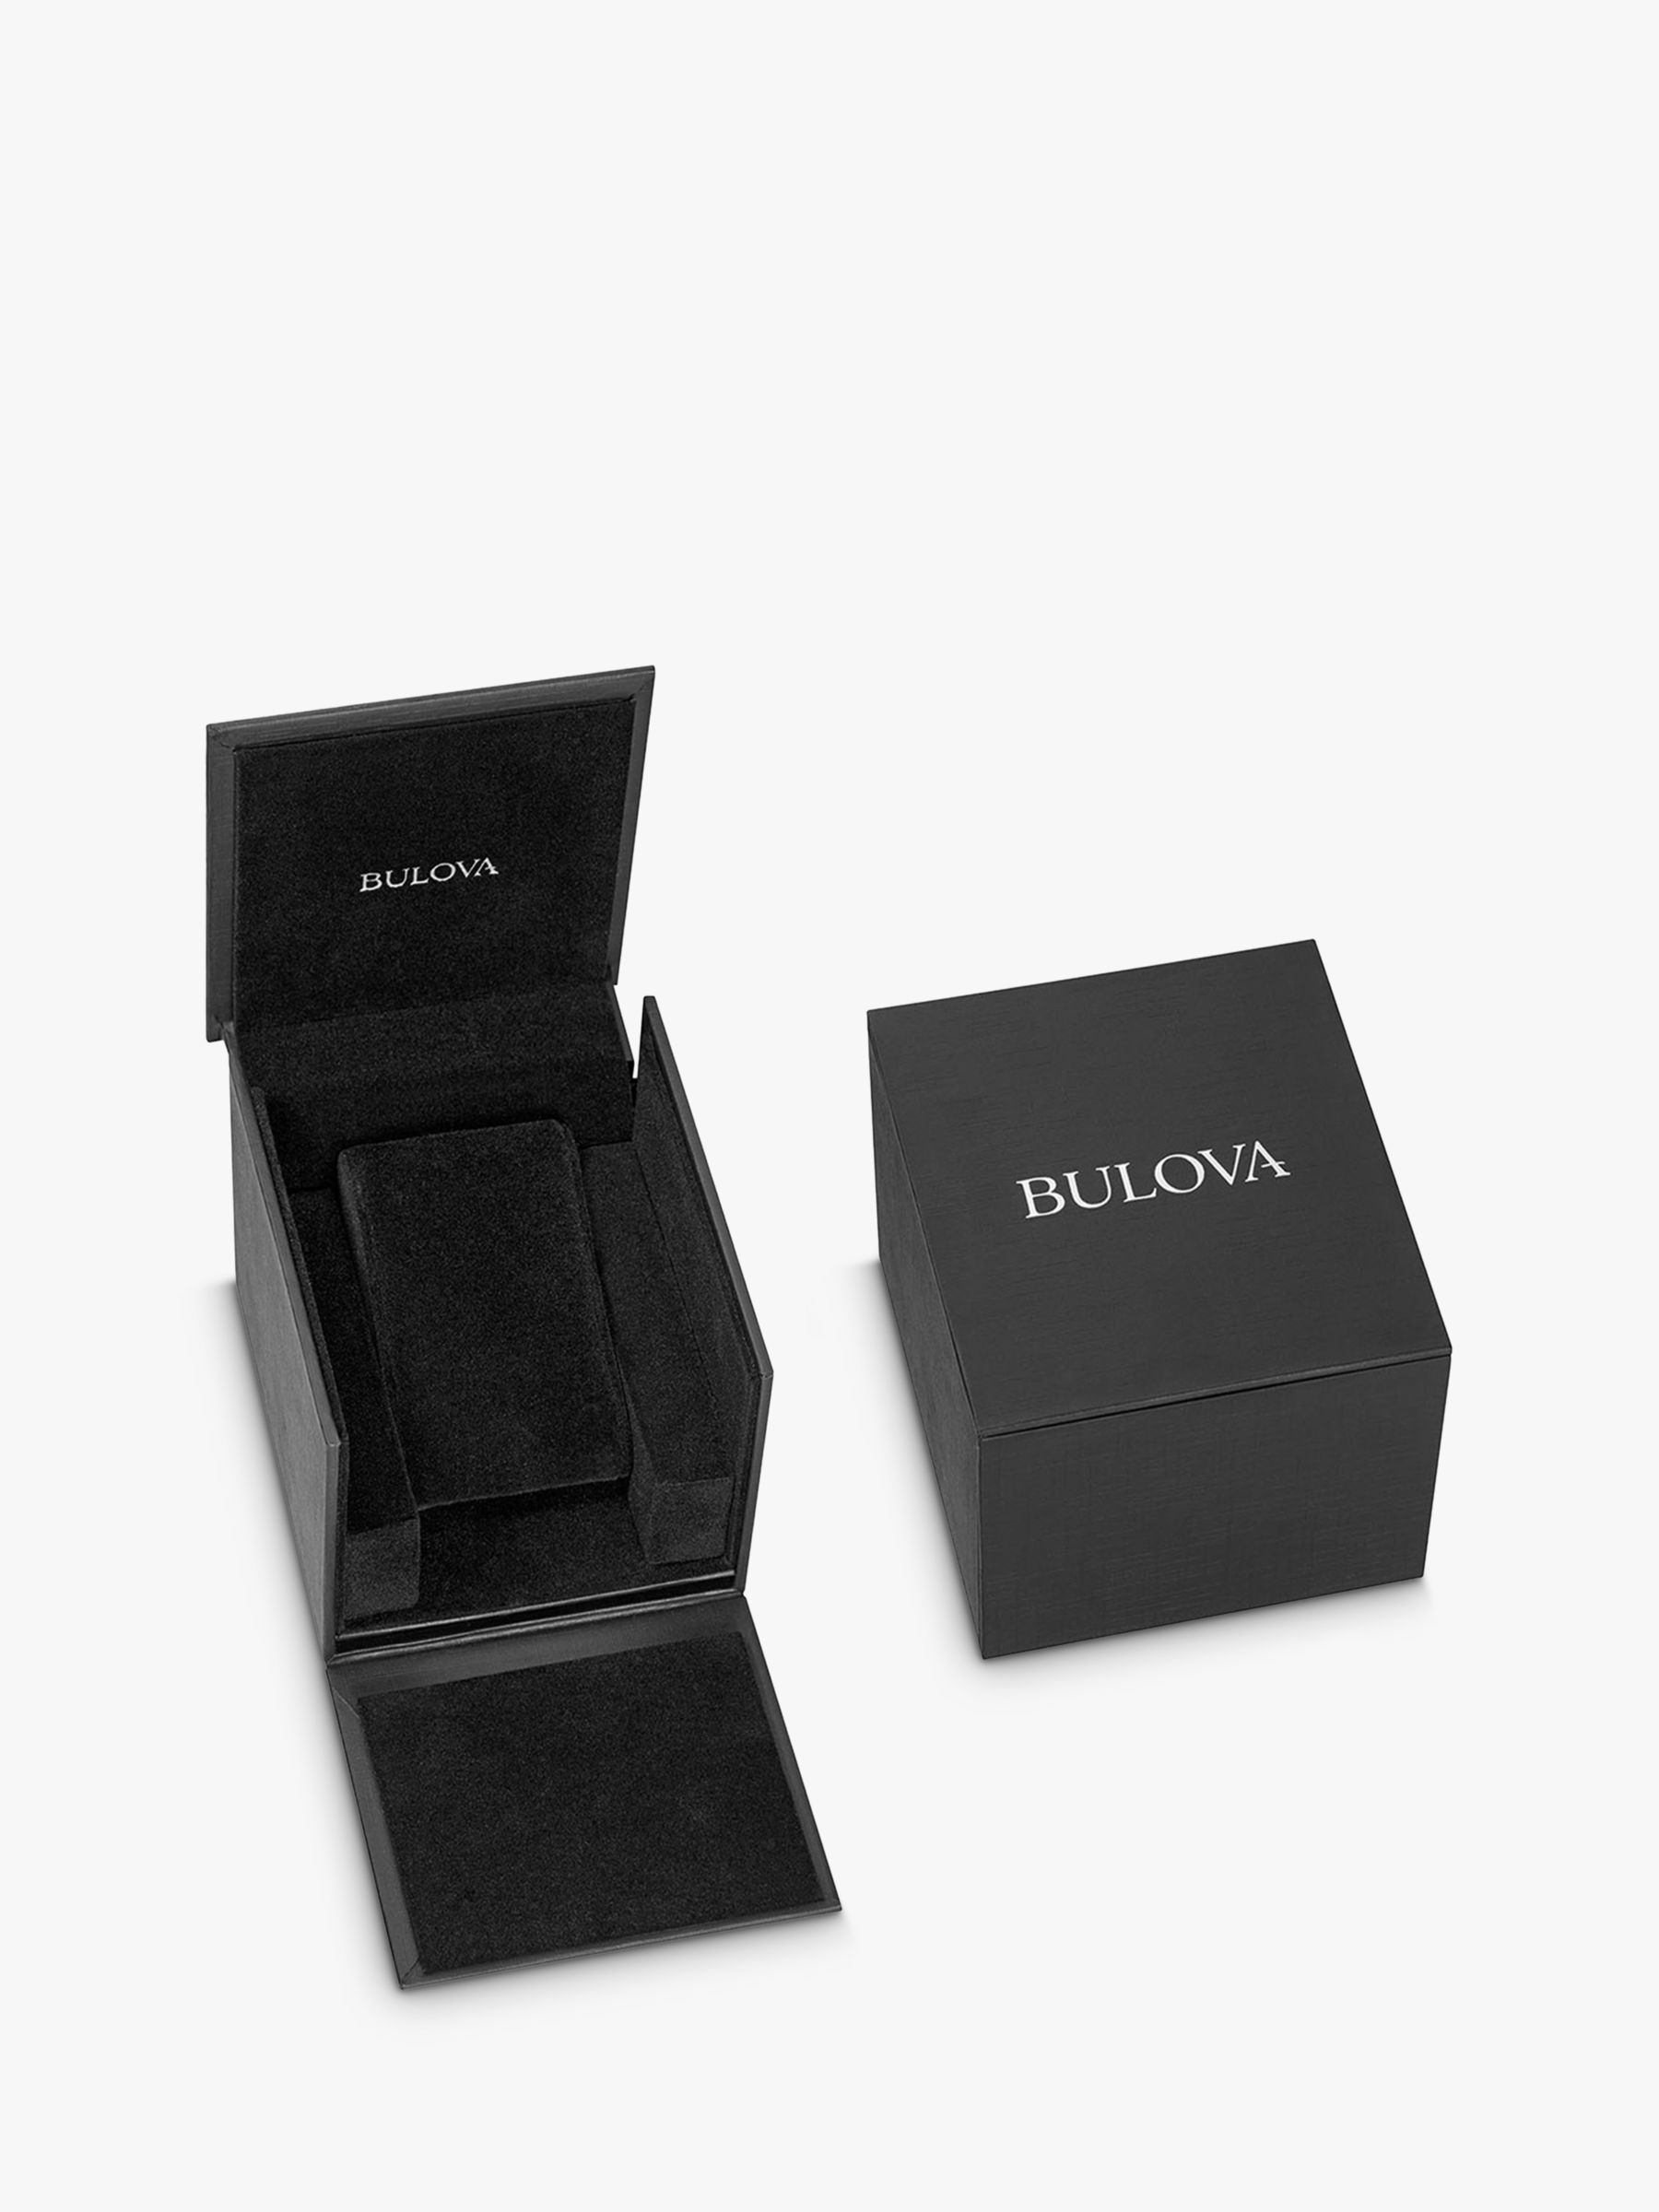 Buy Bulova 96B409 Men's Date Chronograph Bracelet Strap Watch, Silver/Green Online at johnlewis.com